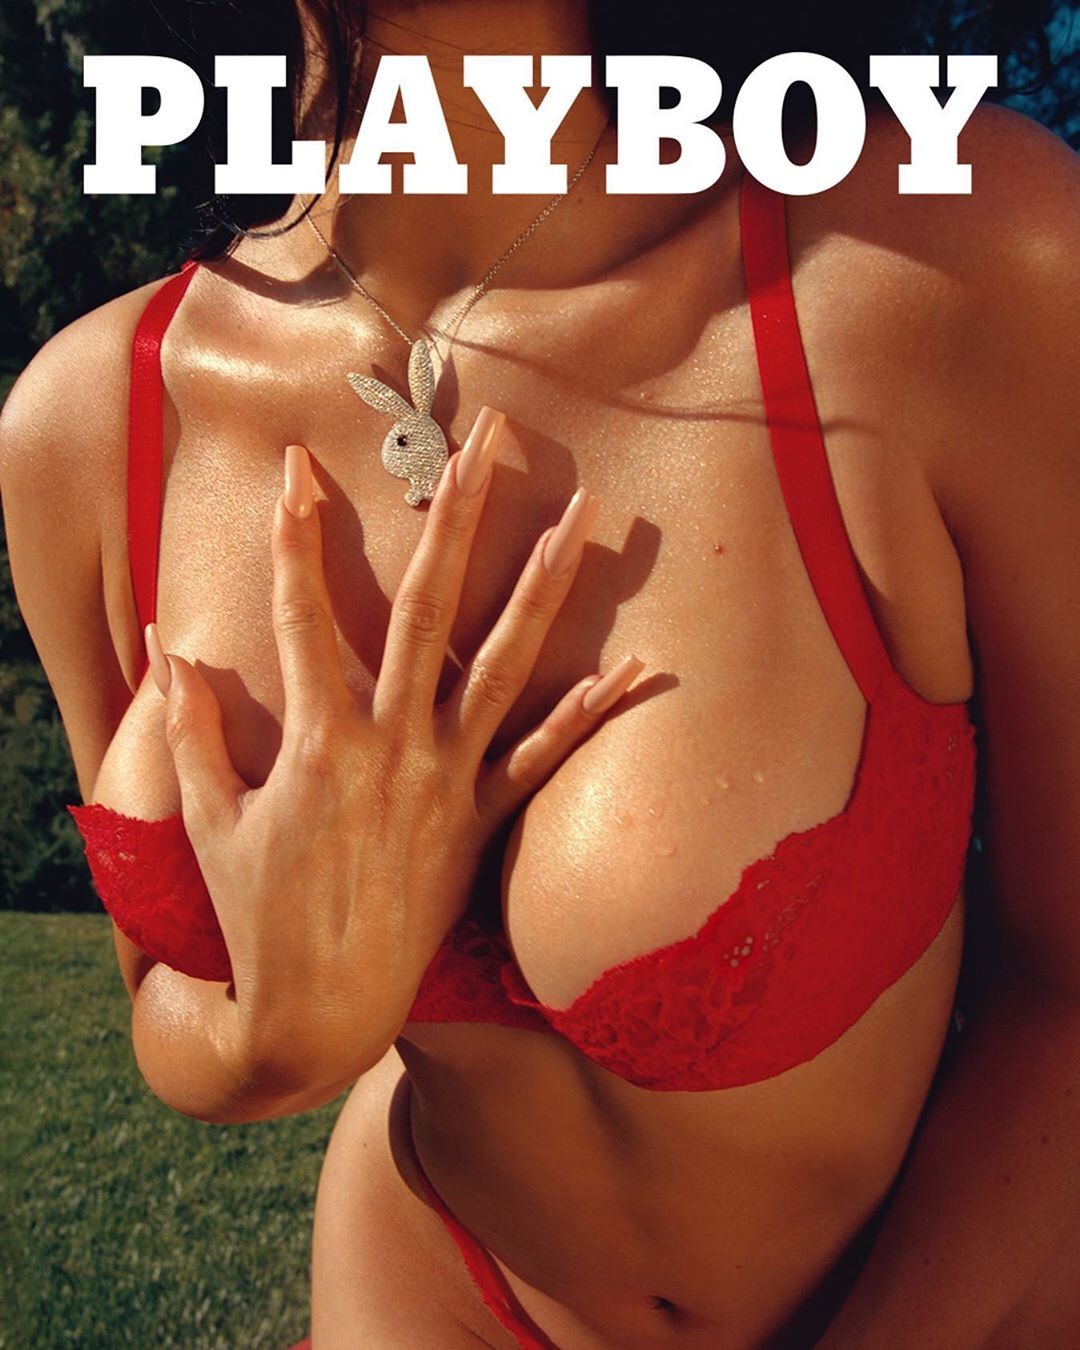 Kylie Jenner na capa da Playboy (Foto: Reprodução/Playboy)